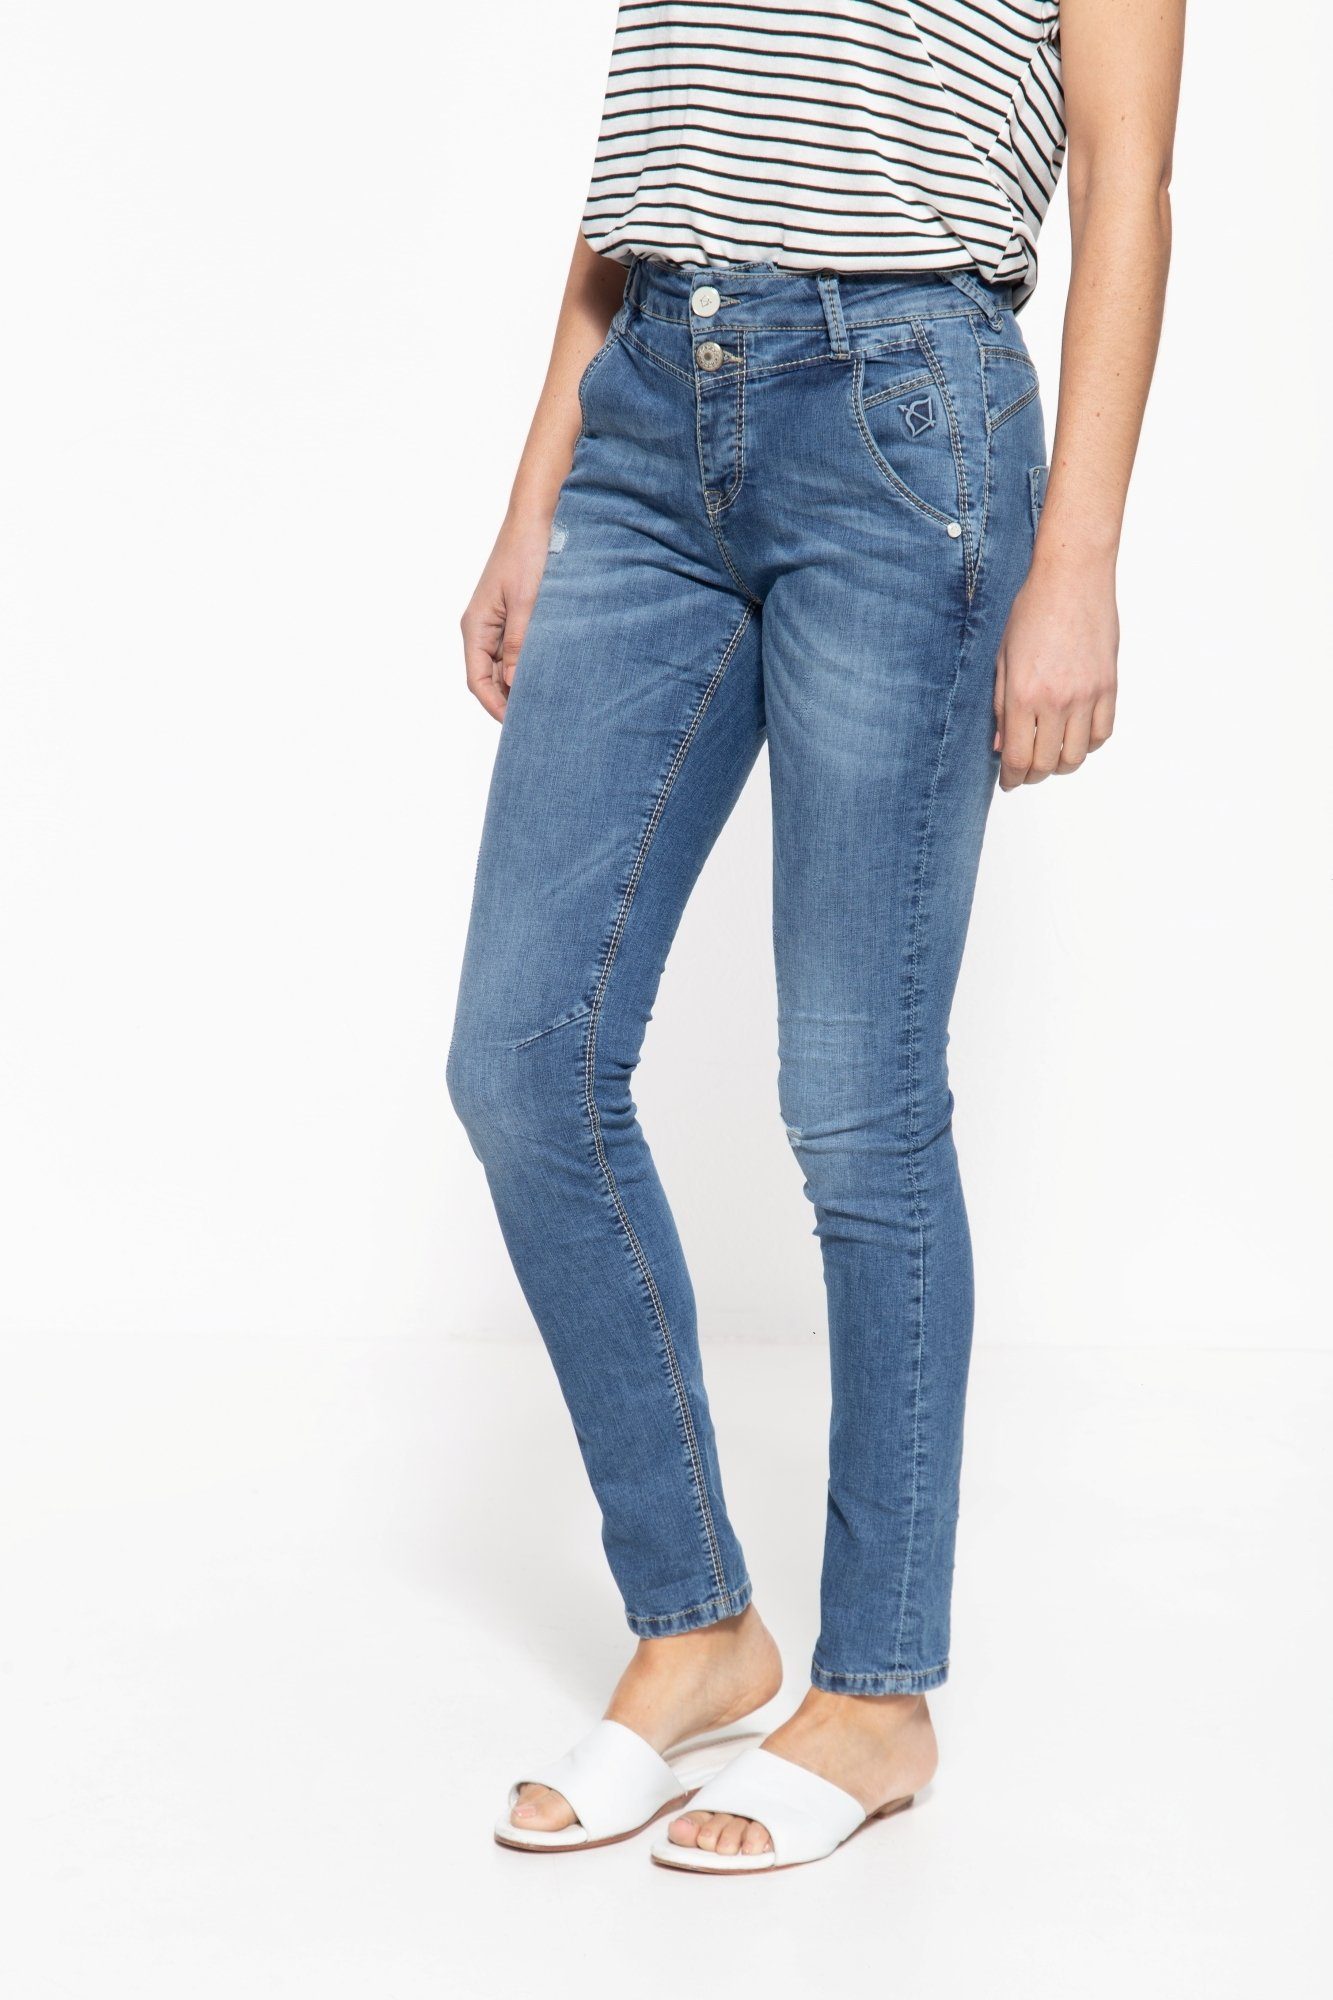 ATT Jeans Boyfriend-Jeans Kira Boy Fit online kaufen | OTTO